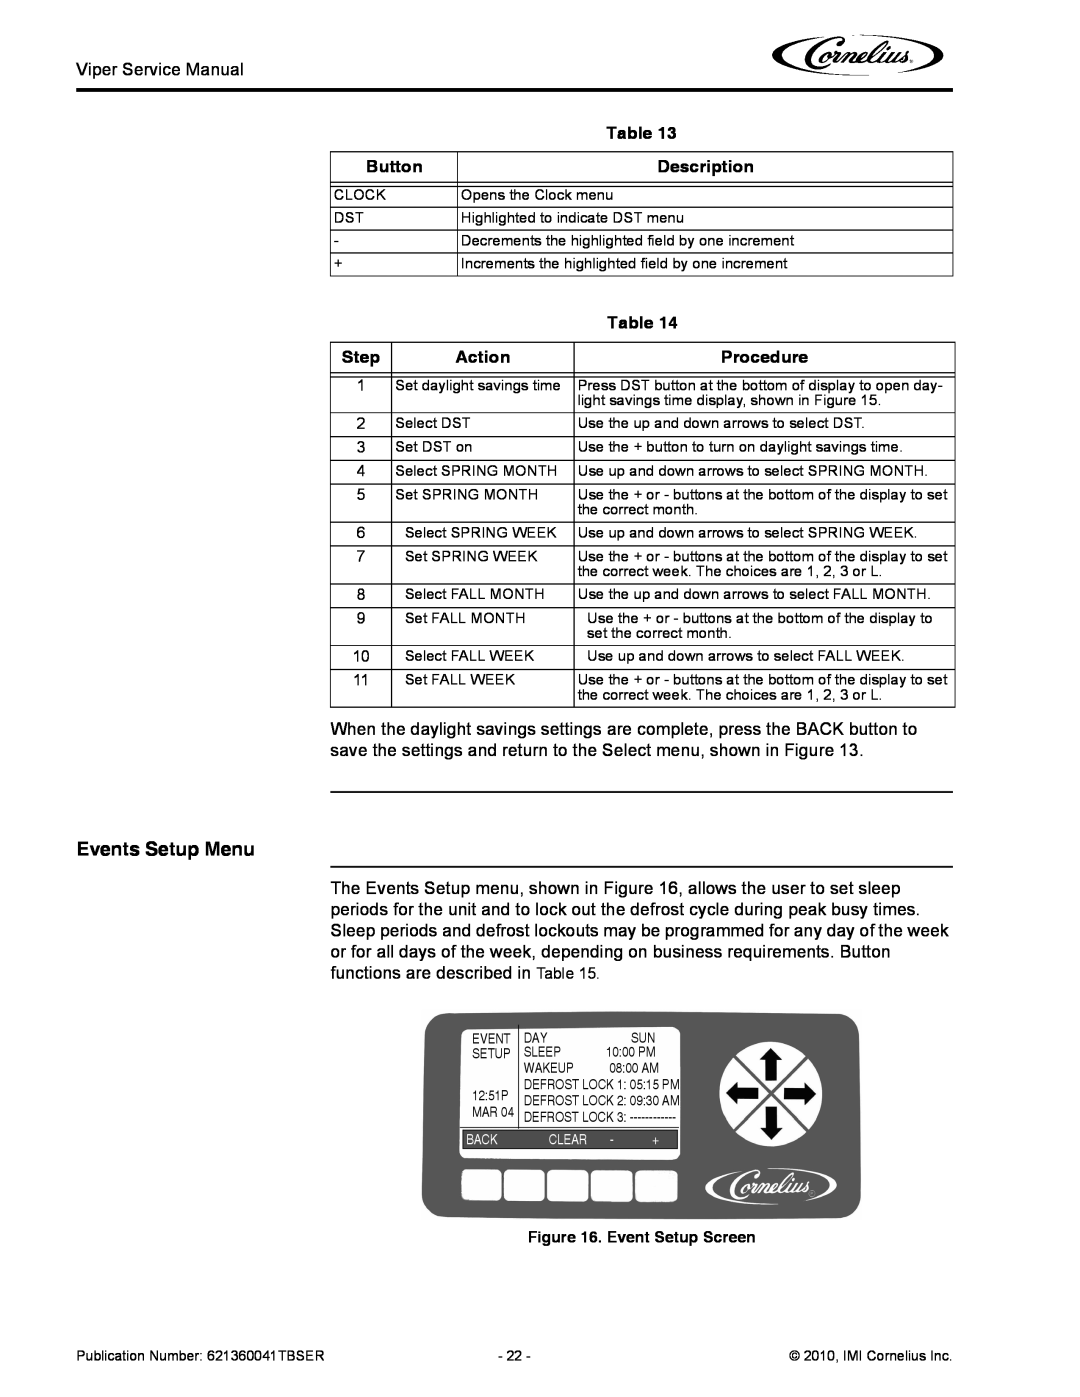 Cornelius 3 service manual Button, Description, Step, Action, Procedure 